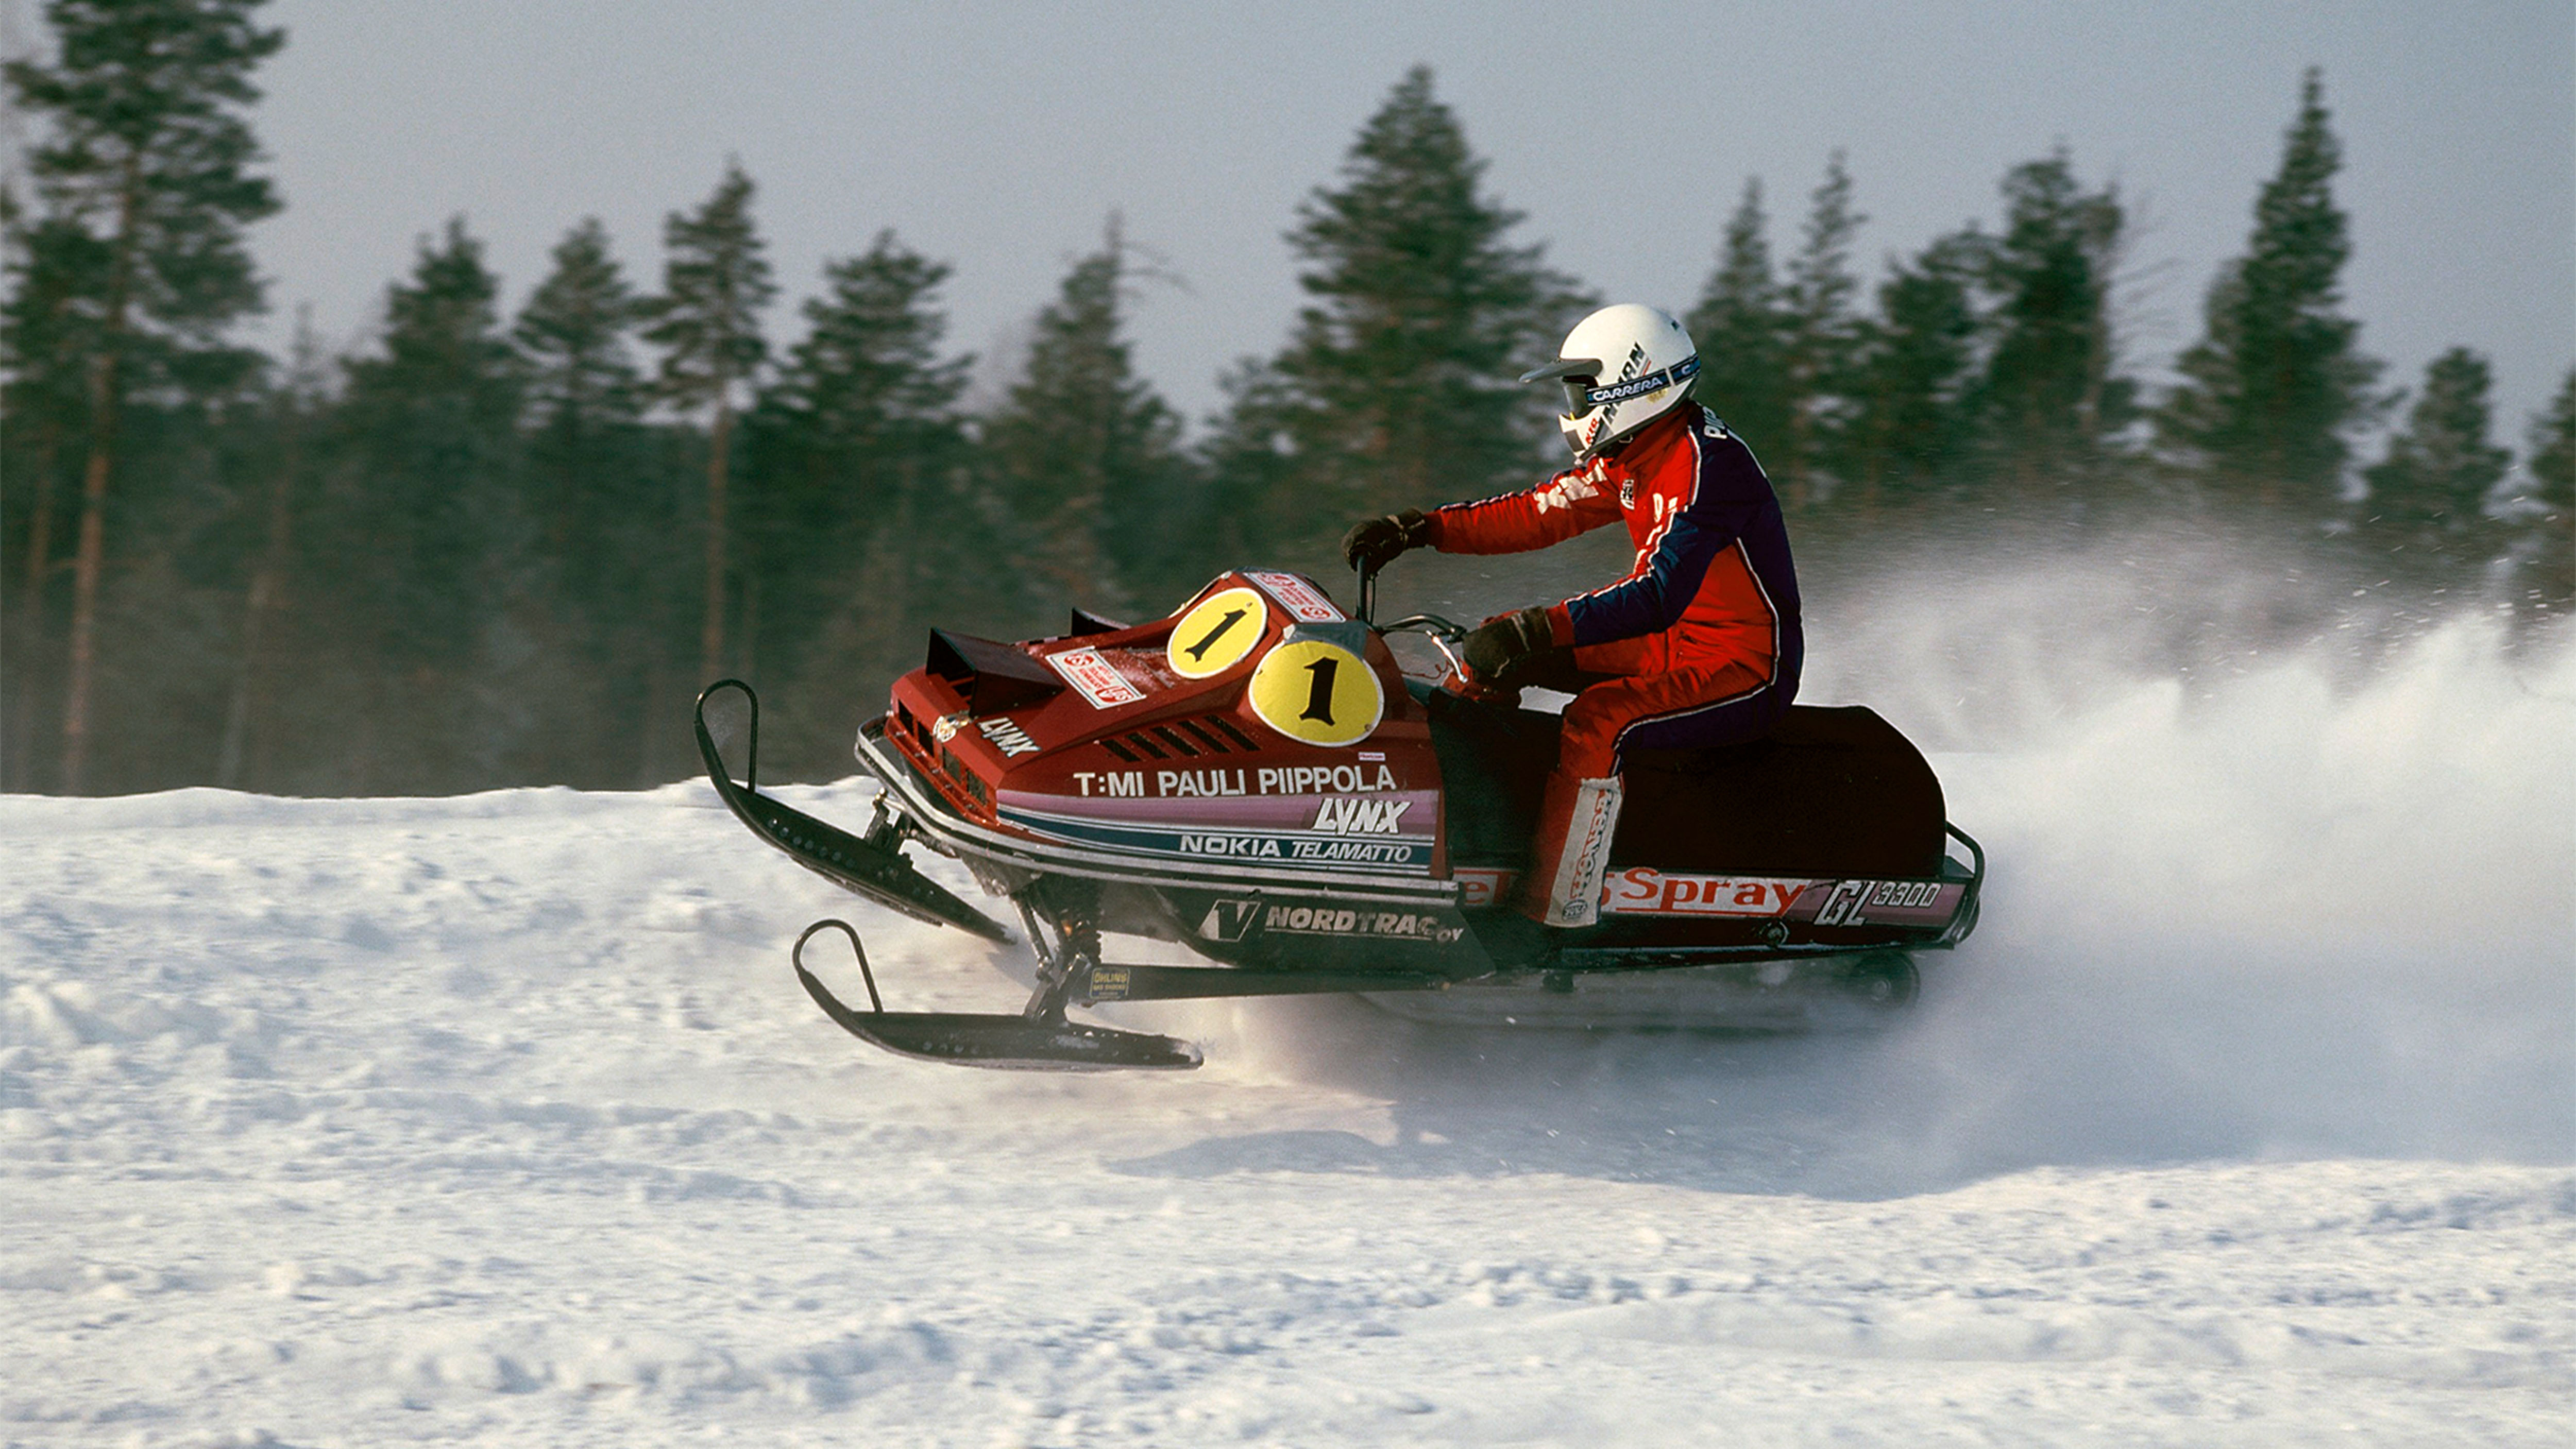 Pauli Piippola riding the first Lynx racing snowmobile on a track